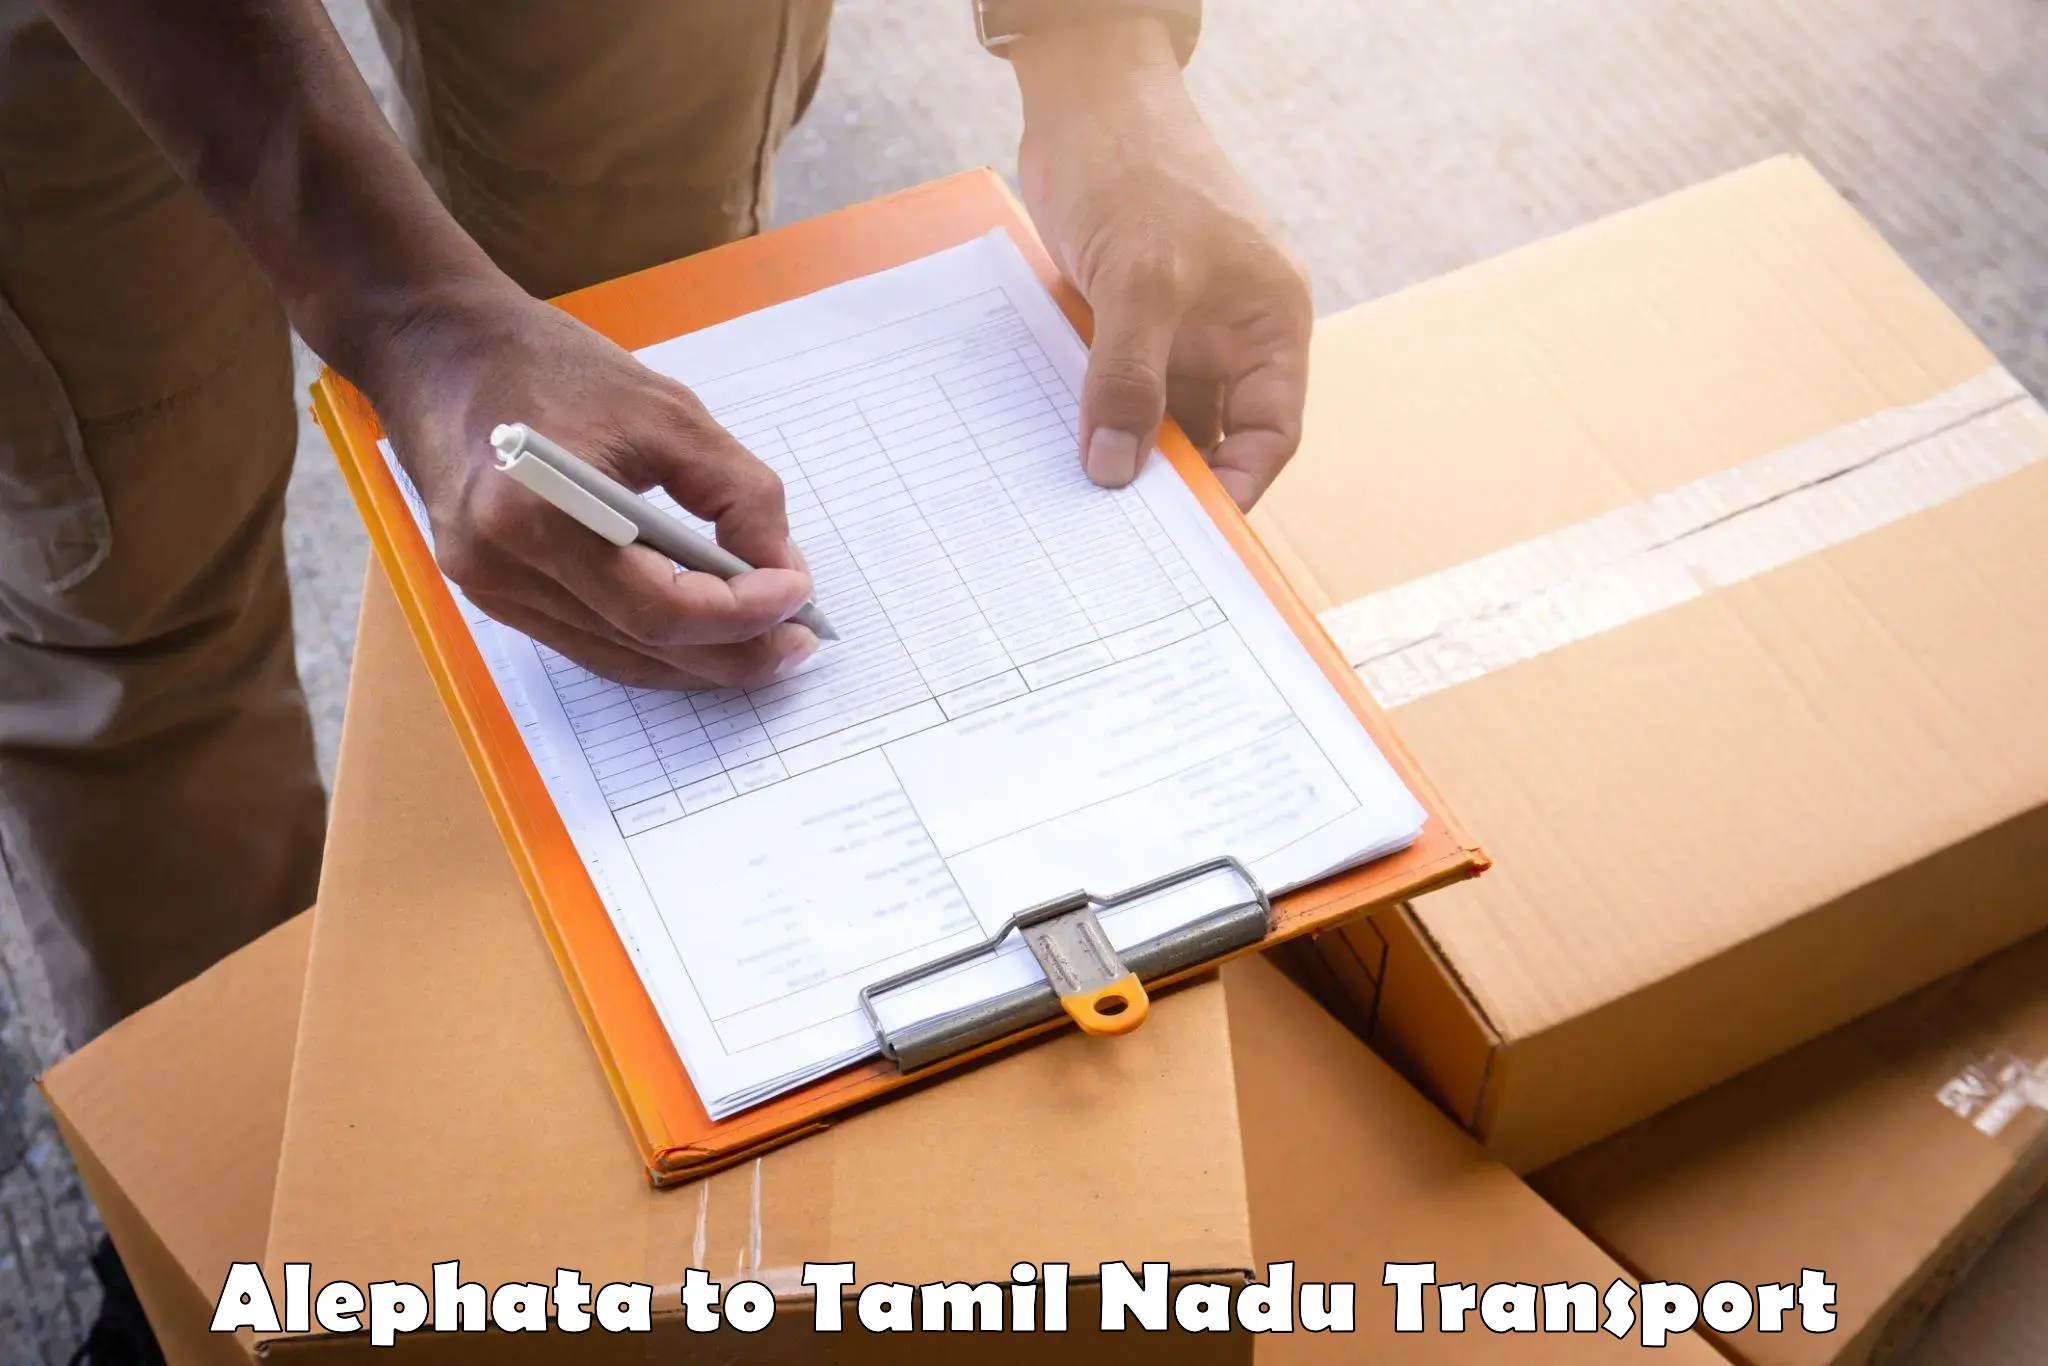 Daily transport service Alephata to Tamil Nadu